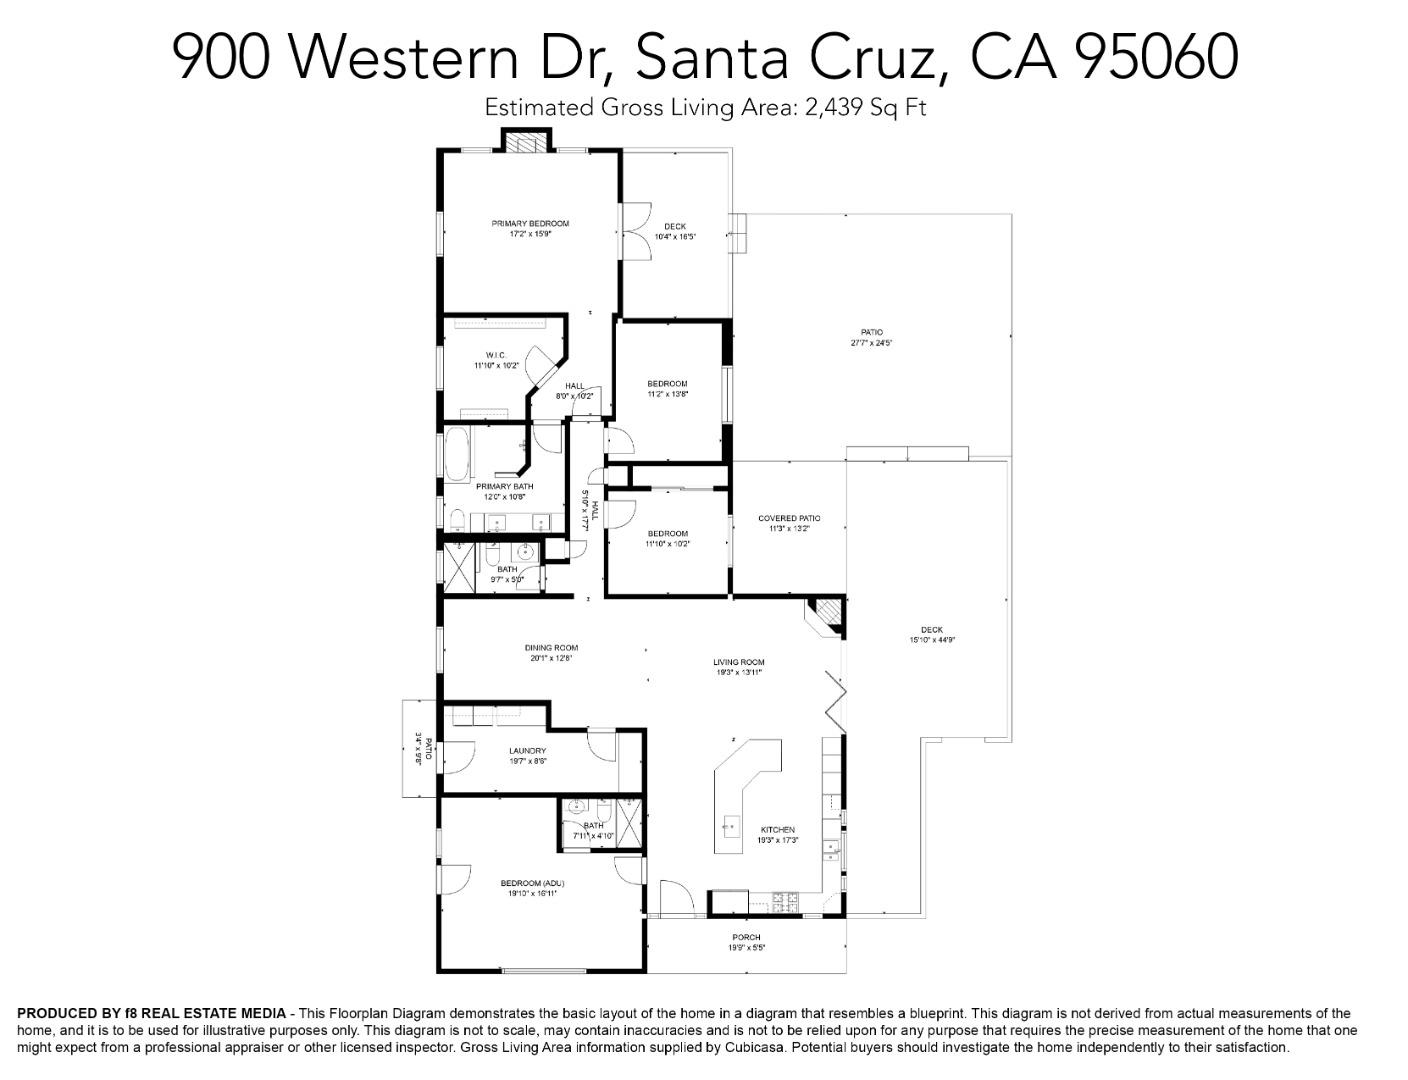 900 Western Dr, Santa Cruz, California, 95060, United States, 4 Bedrooms Bedrooms, ,3 BathroomsBathrooms,Residential,For Sale,900 Western Dr,1498419